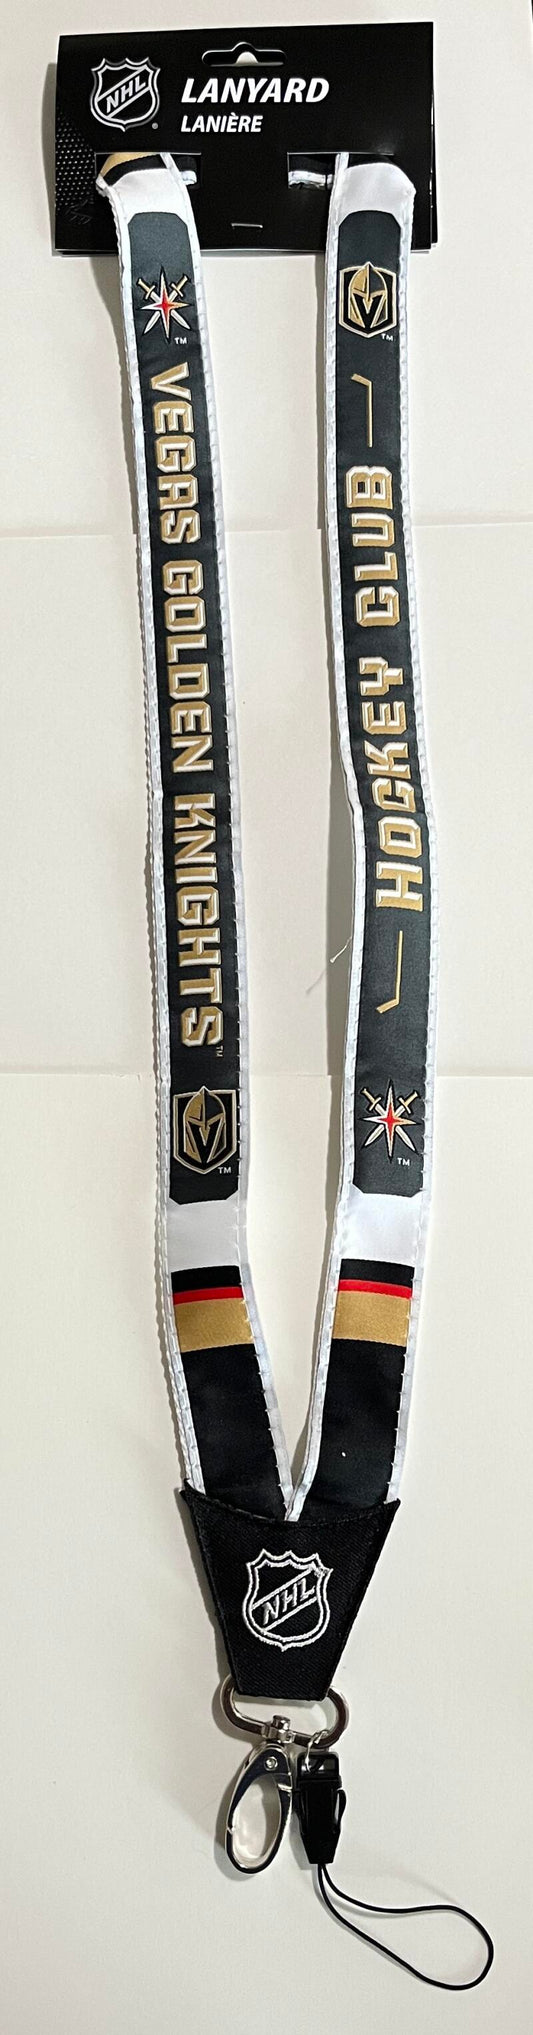 Los Vegas Golden Knights Woven Licensed NHL Hockey Lanyard Metal Clasp Image 1